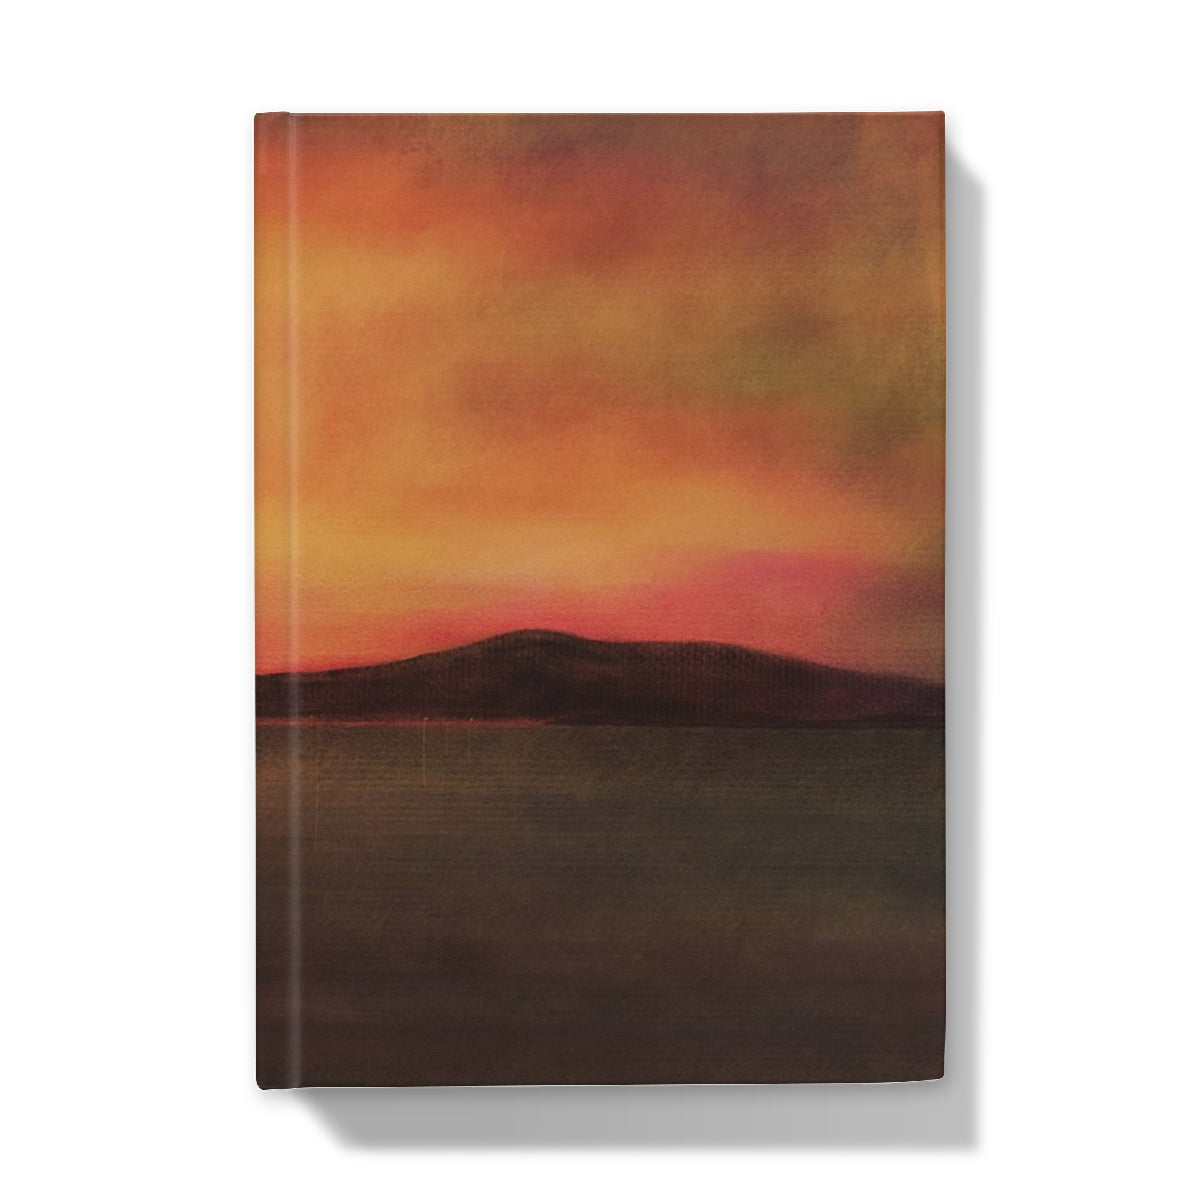 Harris Sunset Art Gifts Hardback Journal-Journals & Notebooks-Hebridean Islands Art Gallery-A4-Lined-Paintings, Prints, Homeware, Art Gifts From Scotland By Scottish Artist Kevin Hunter